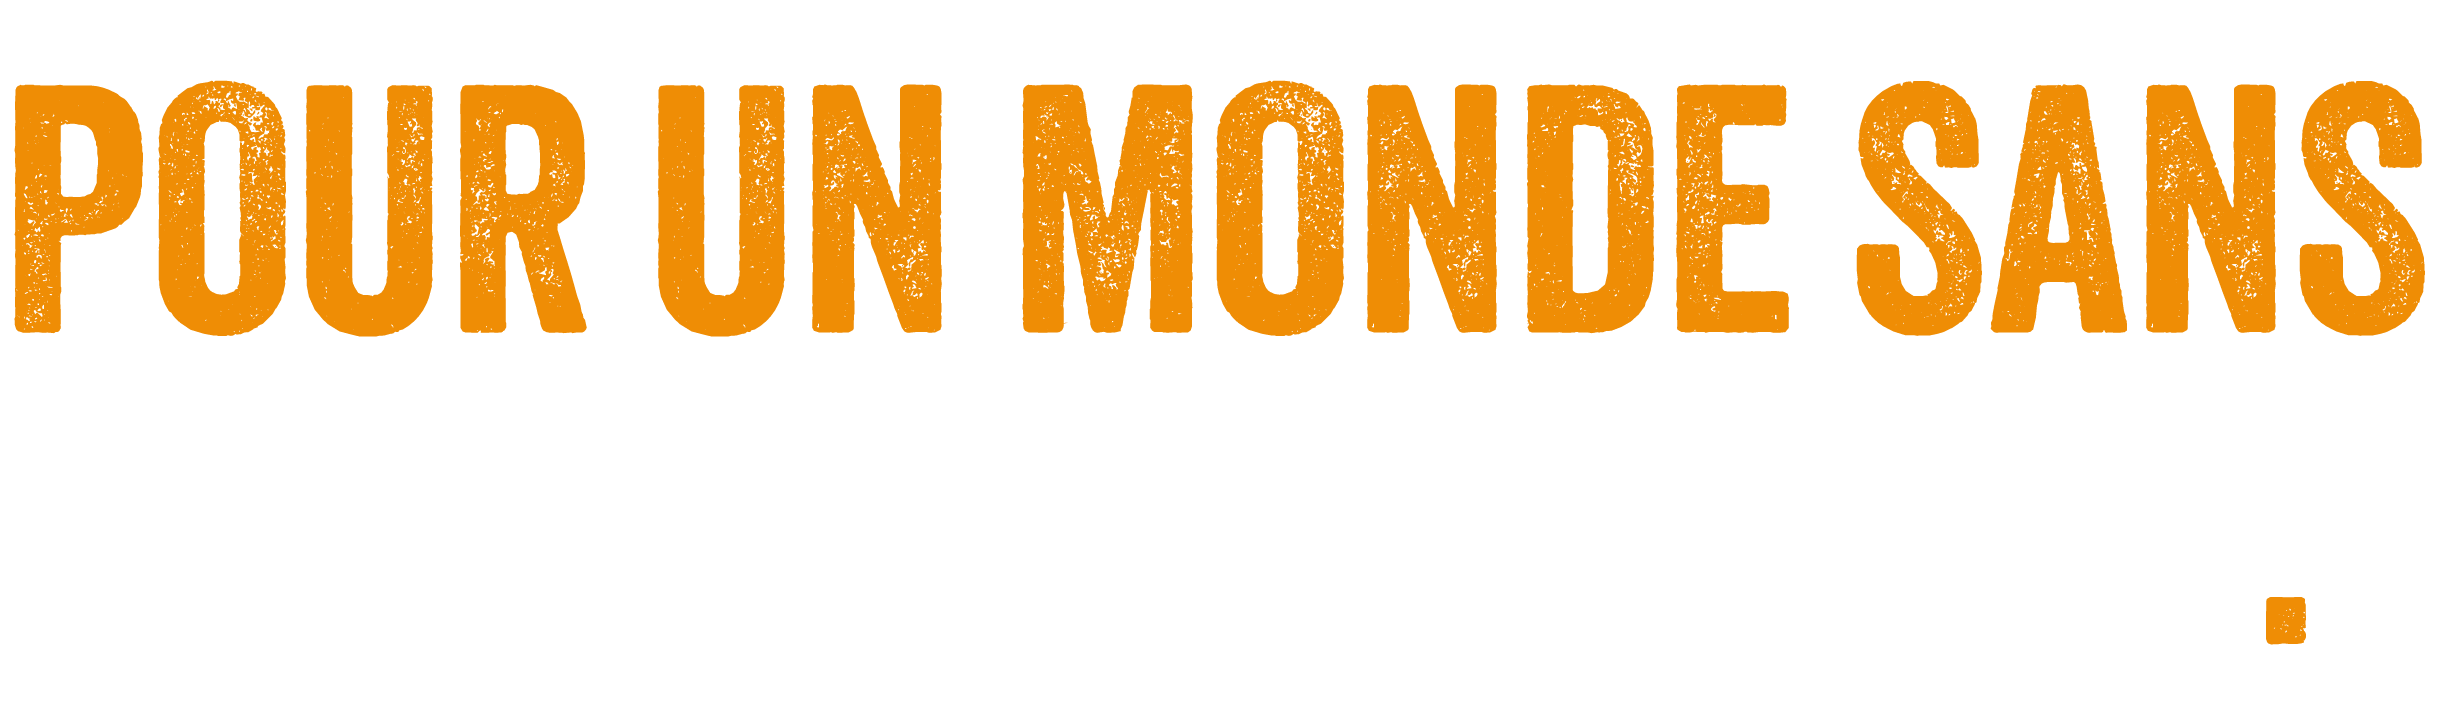 s+ banner frans